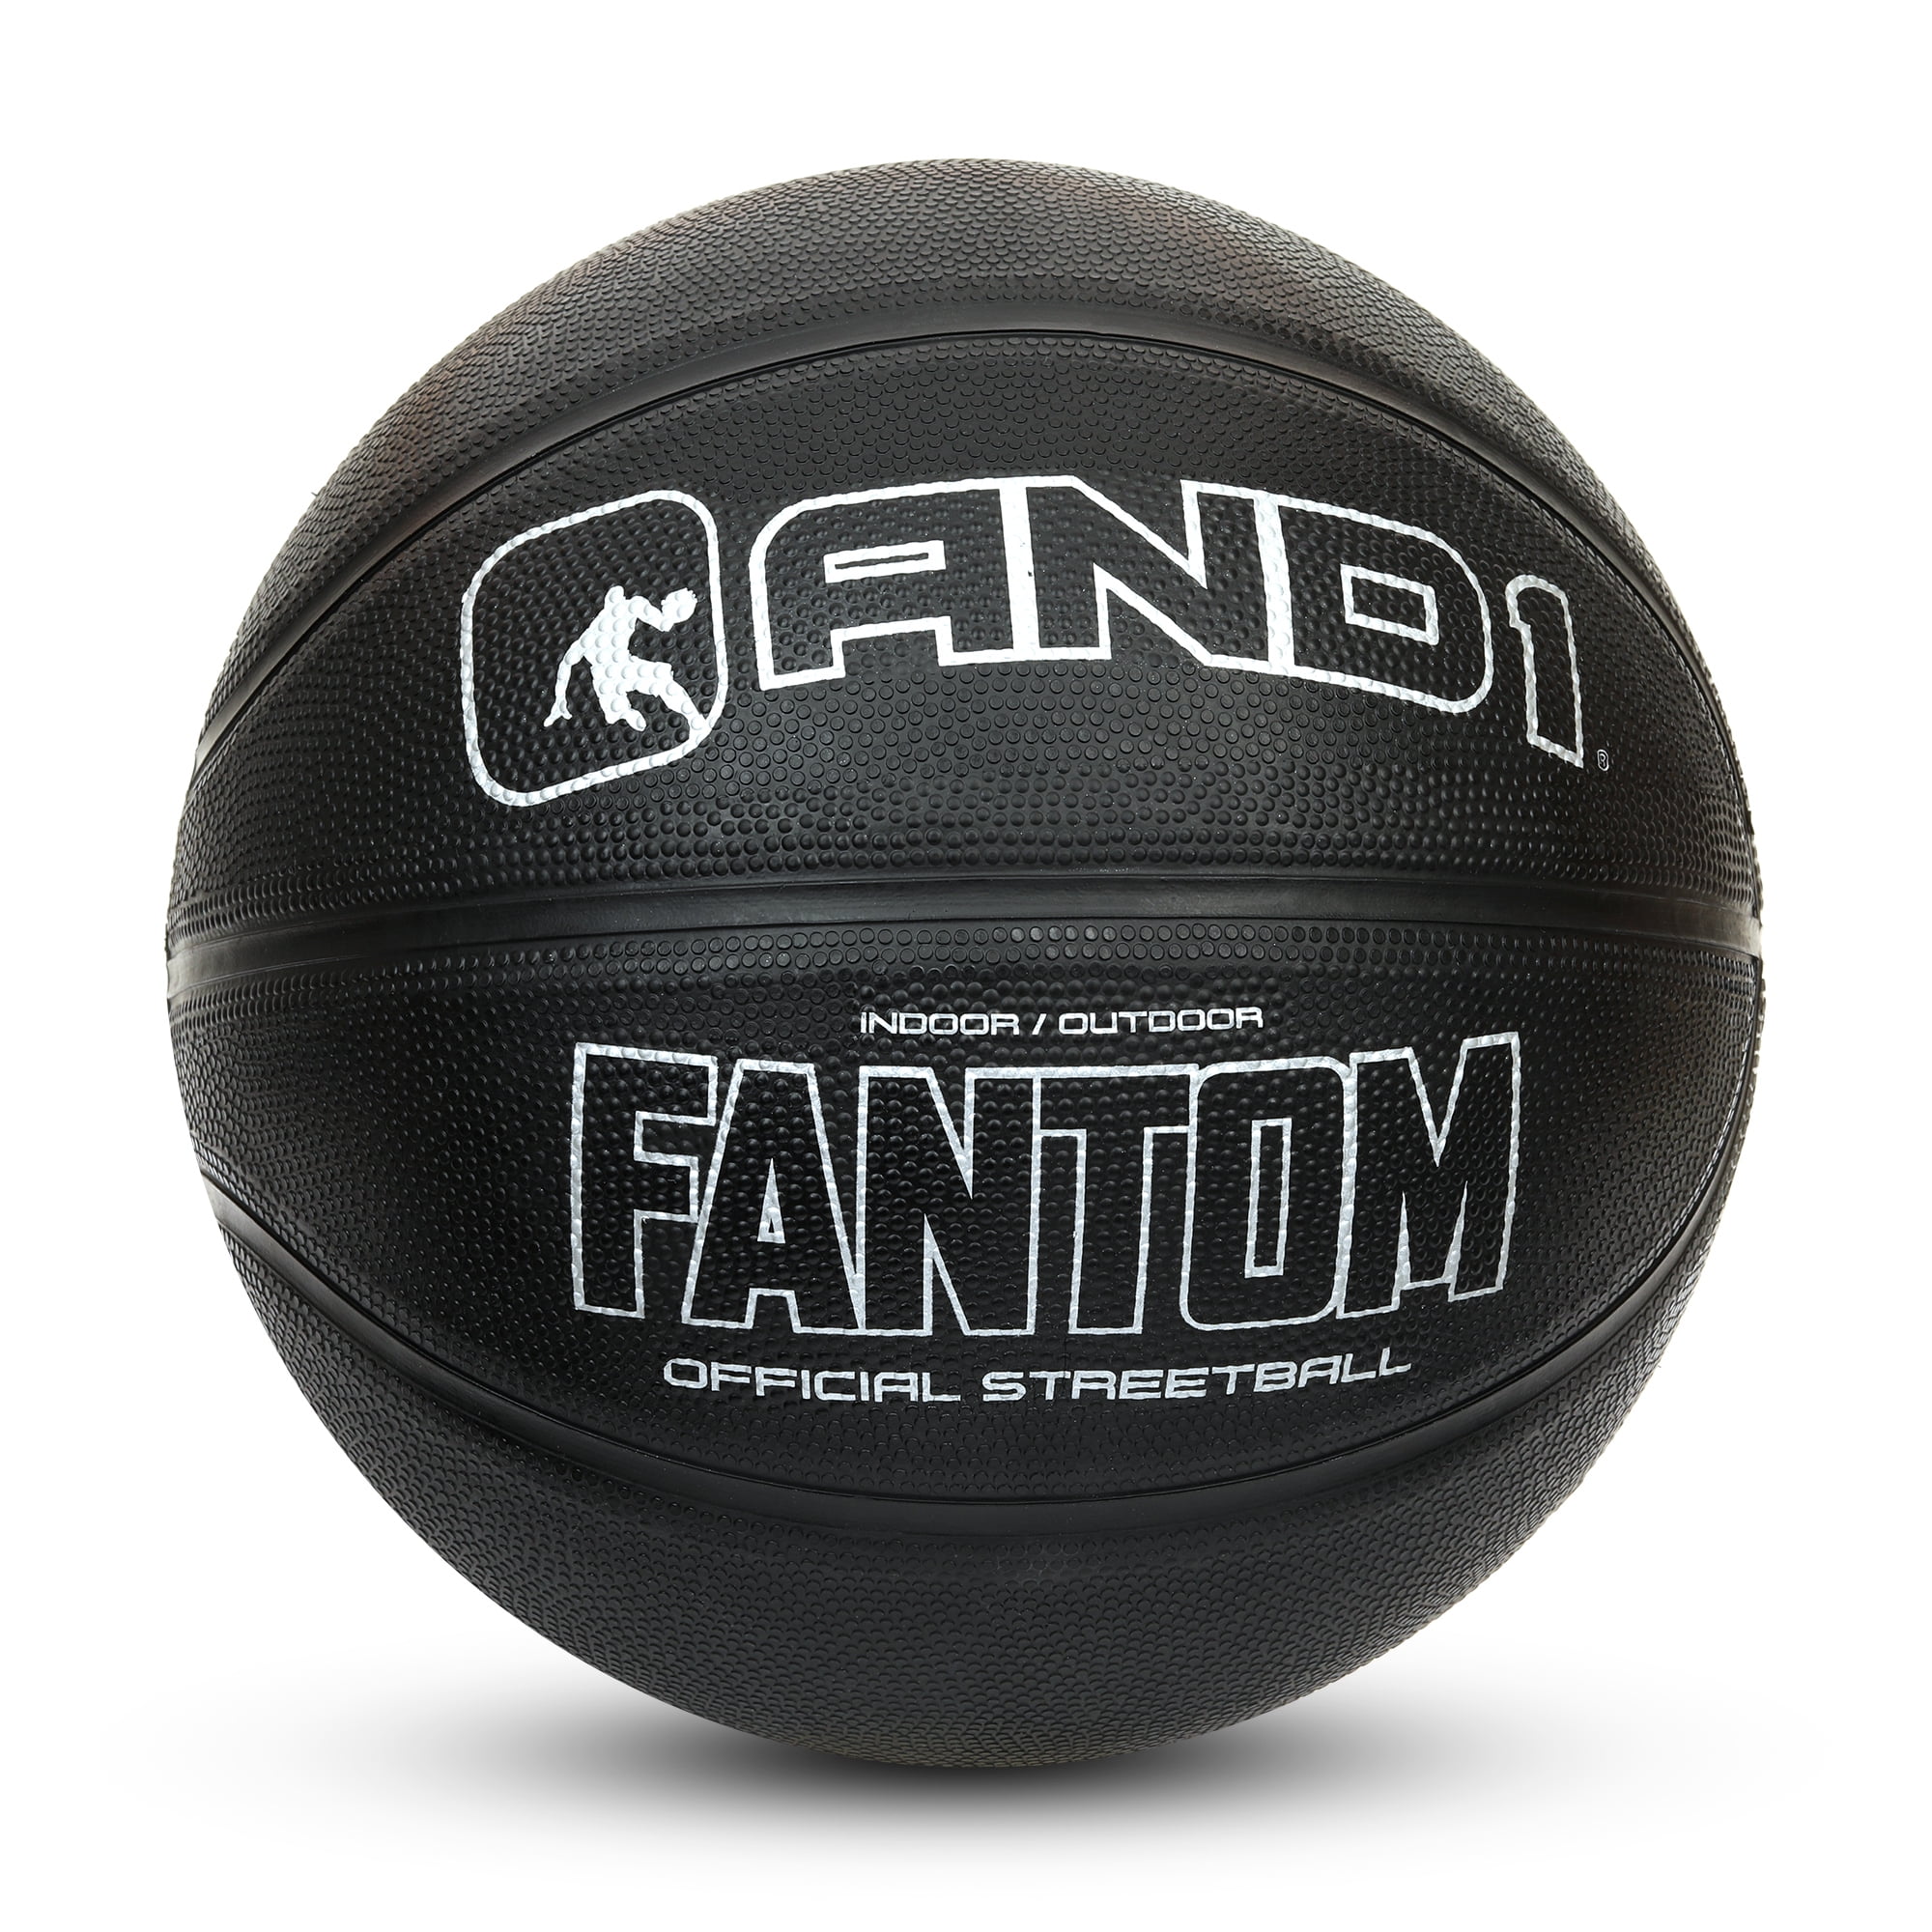 AND1 Fantom Street Basketball